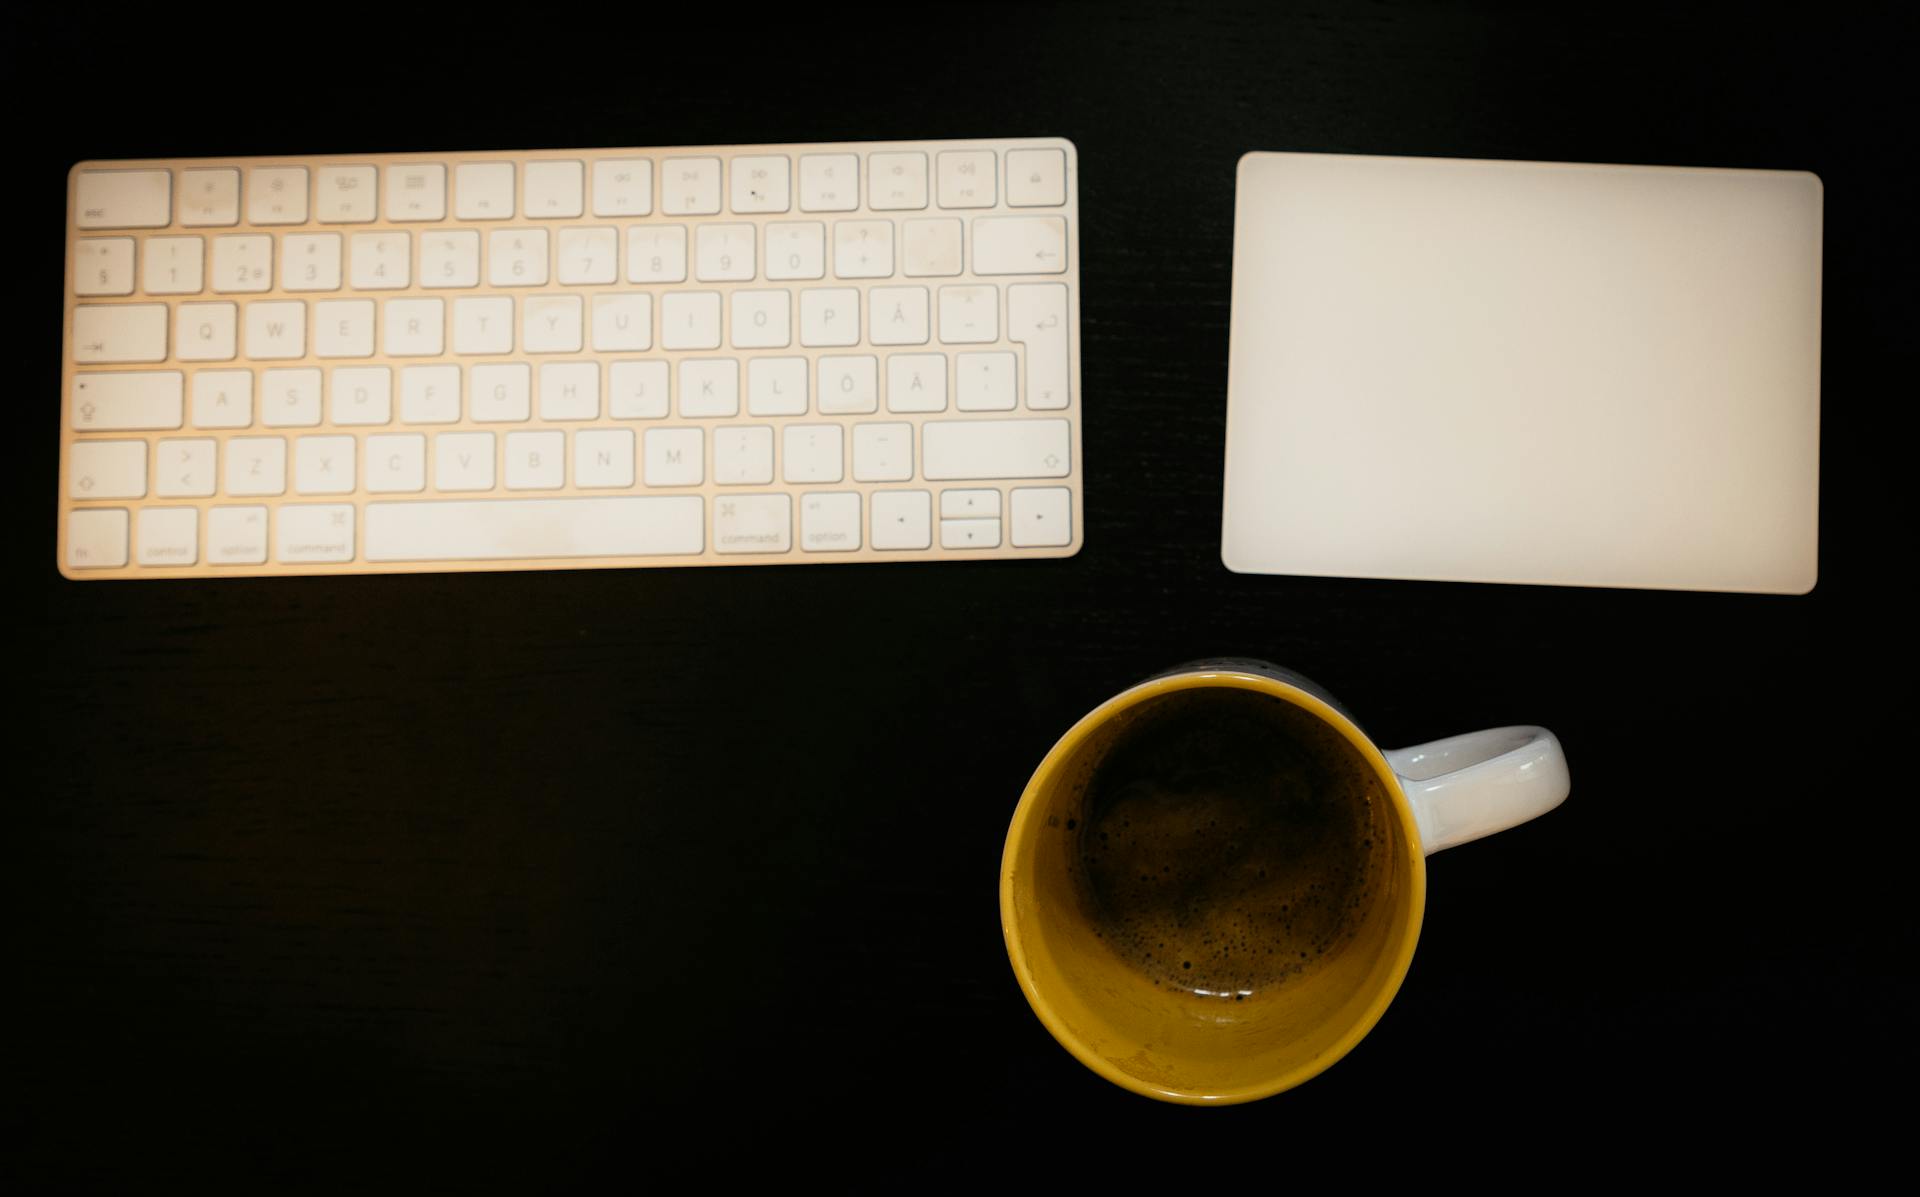 Coffee, keyboard and mousepad